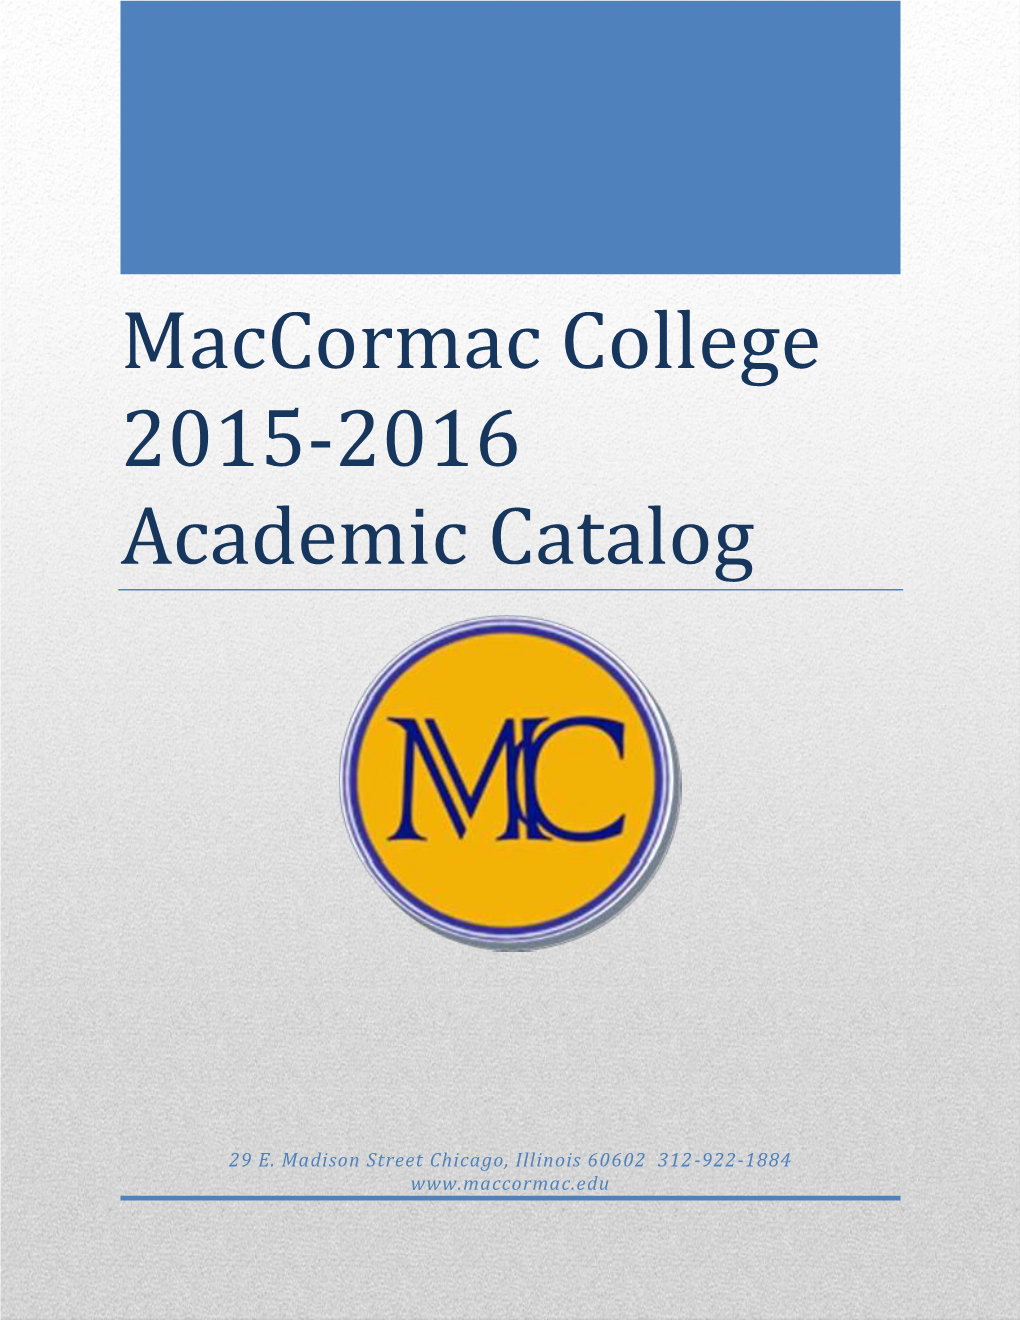 Maccormac College 2015-2016 Academic Catalog